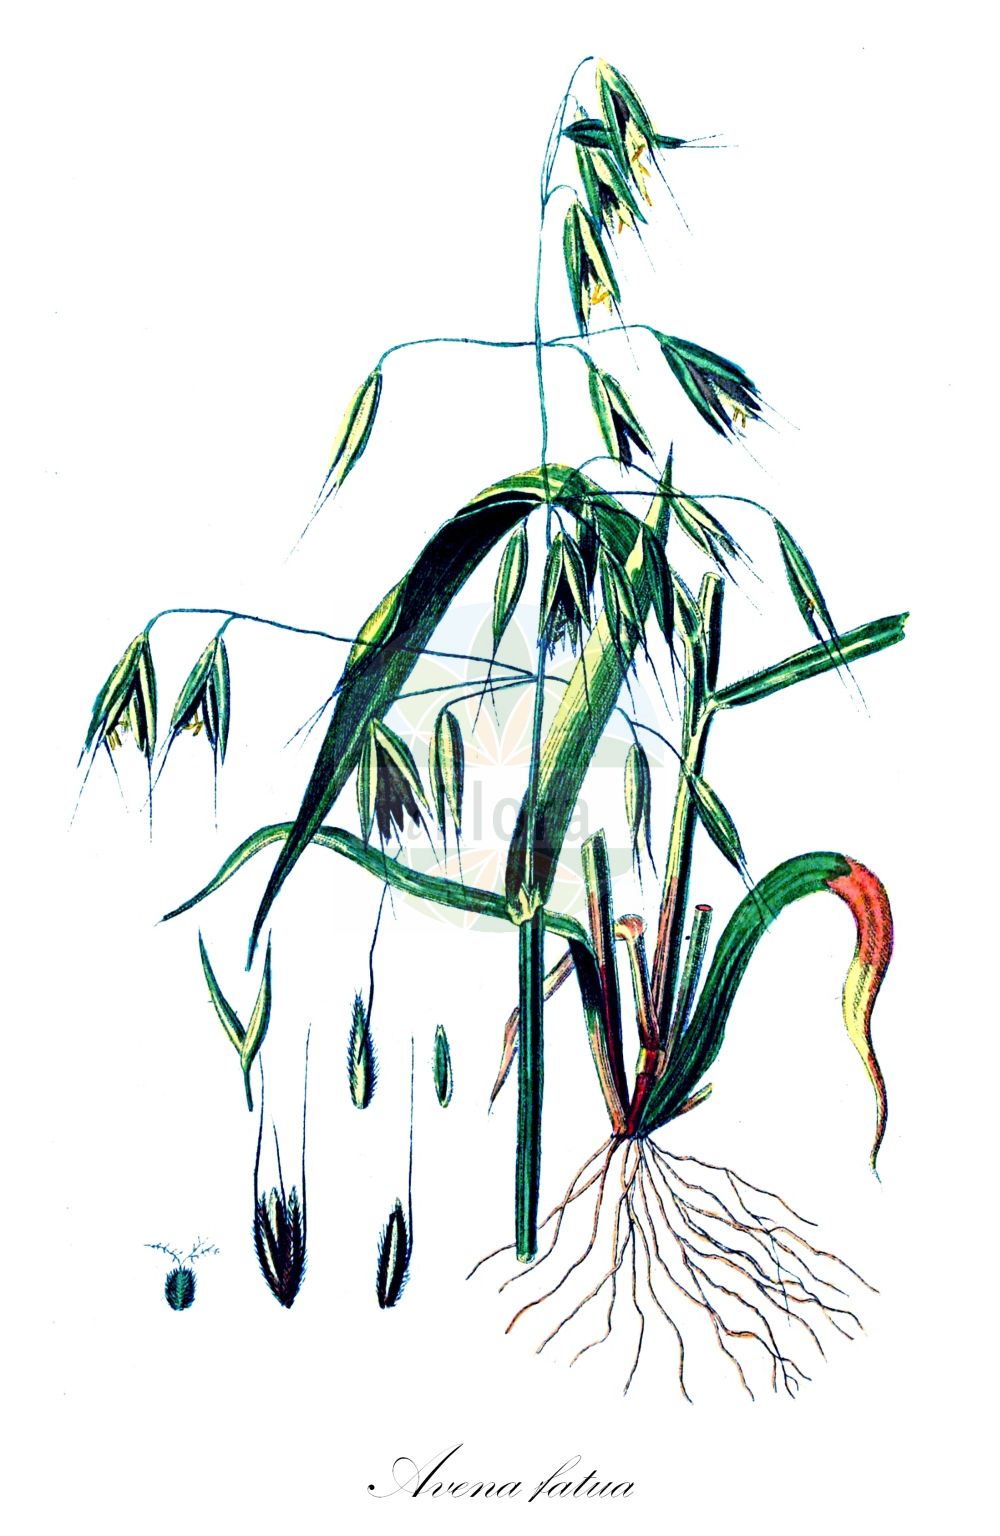 Historische Abbildung von Avena fatua (Flug-Hafer - Wild-oat). Das Bild zeigt Blatt, Bluete, Frucht und Same. ---- Historical Drawing of Avena fatua (Flug-Hafer - Wild-oat). The image is showing leaf, flower, fruit and seed.(Avena fatua,Flug-Hafer,Wild-oat,Anelytrum avenaceum,Avena fatua,Avena sativa subsp. fatua,Flug-Hafer,Sommerungs-Flug-Hafer,Wild-oat,Algerian Oat,Common Wild Oat,Spring Oat,Avena,Hafer,Oat,Poaceae,Süßgräser,Grass family,Blatt,Bluete,Frucht,Same,leaf,flower,fruit,seed,Kops (1800-1934))